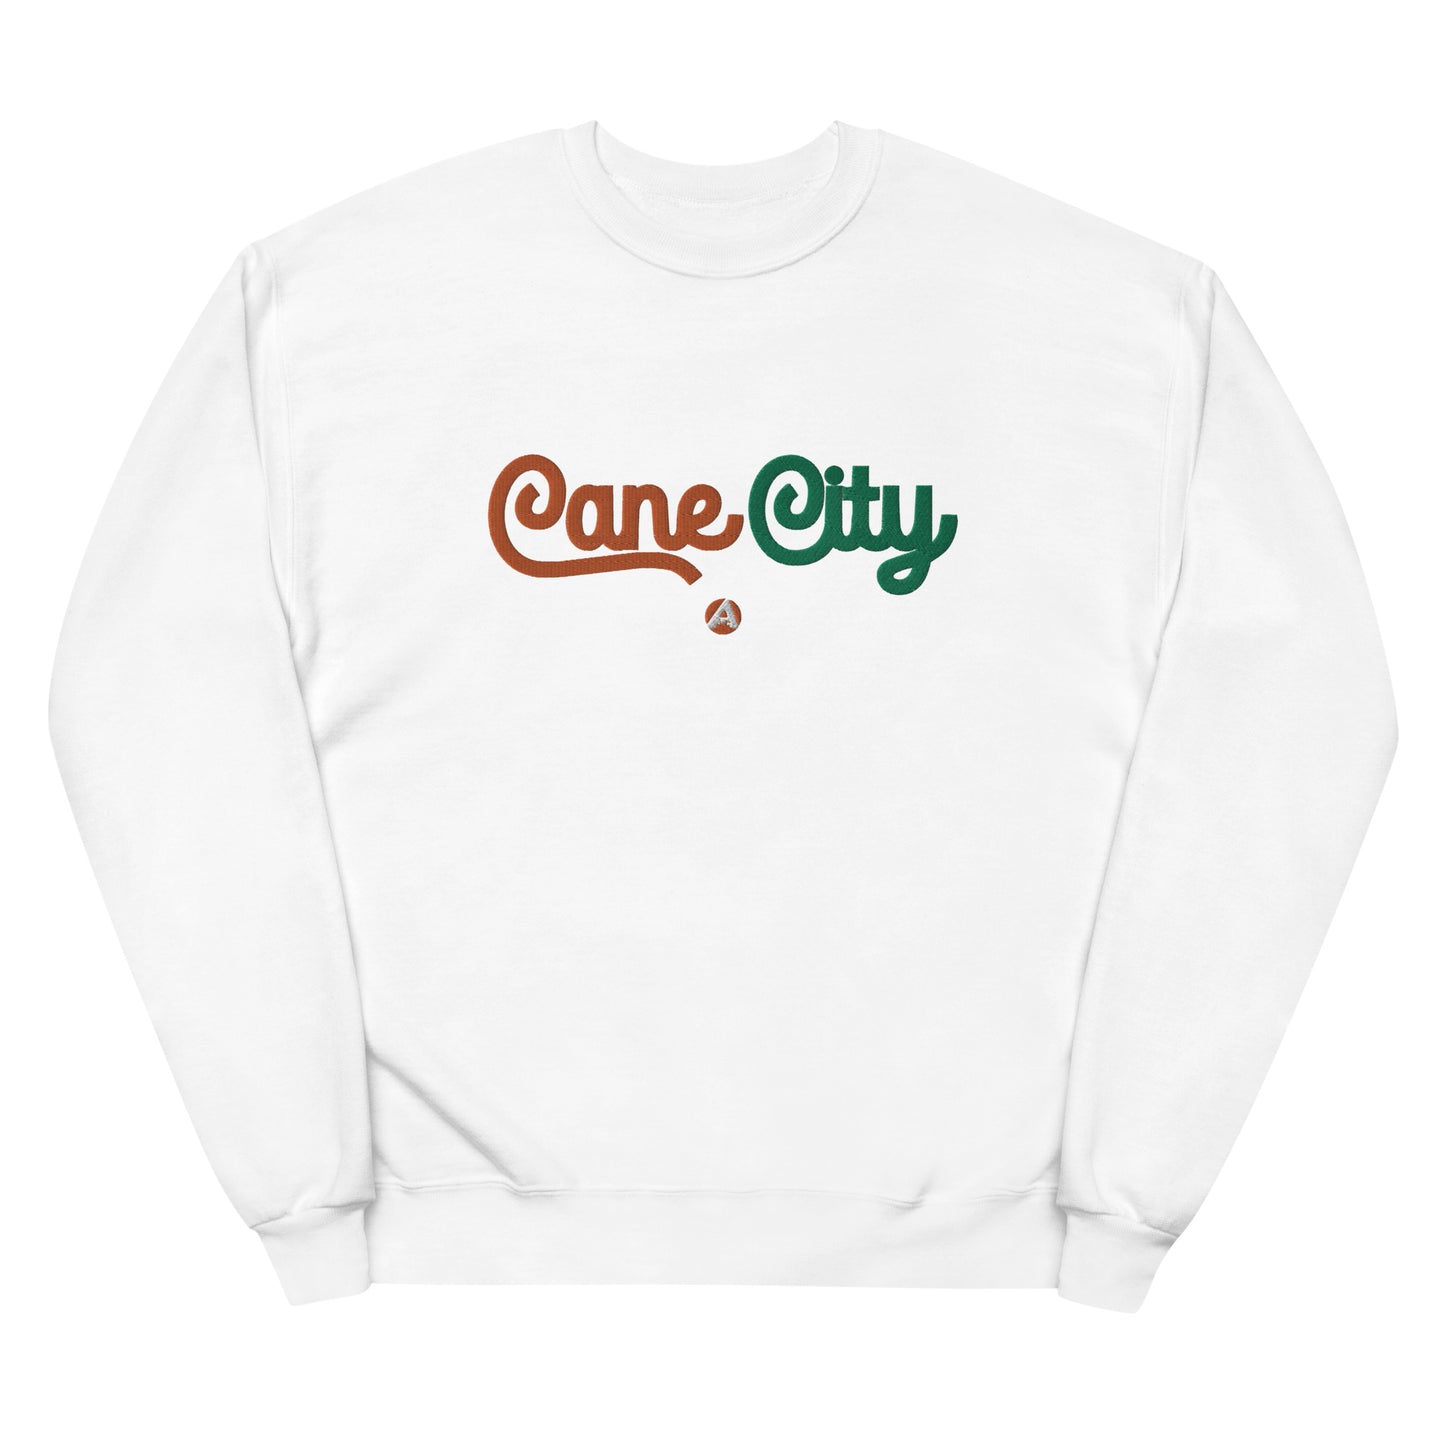 Cane City Sweatshirt